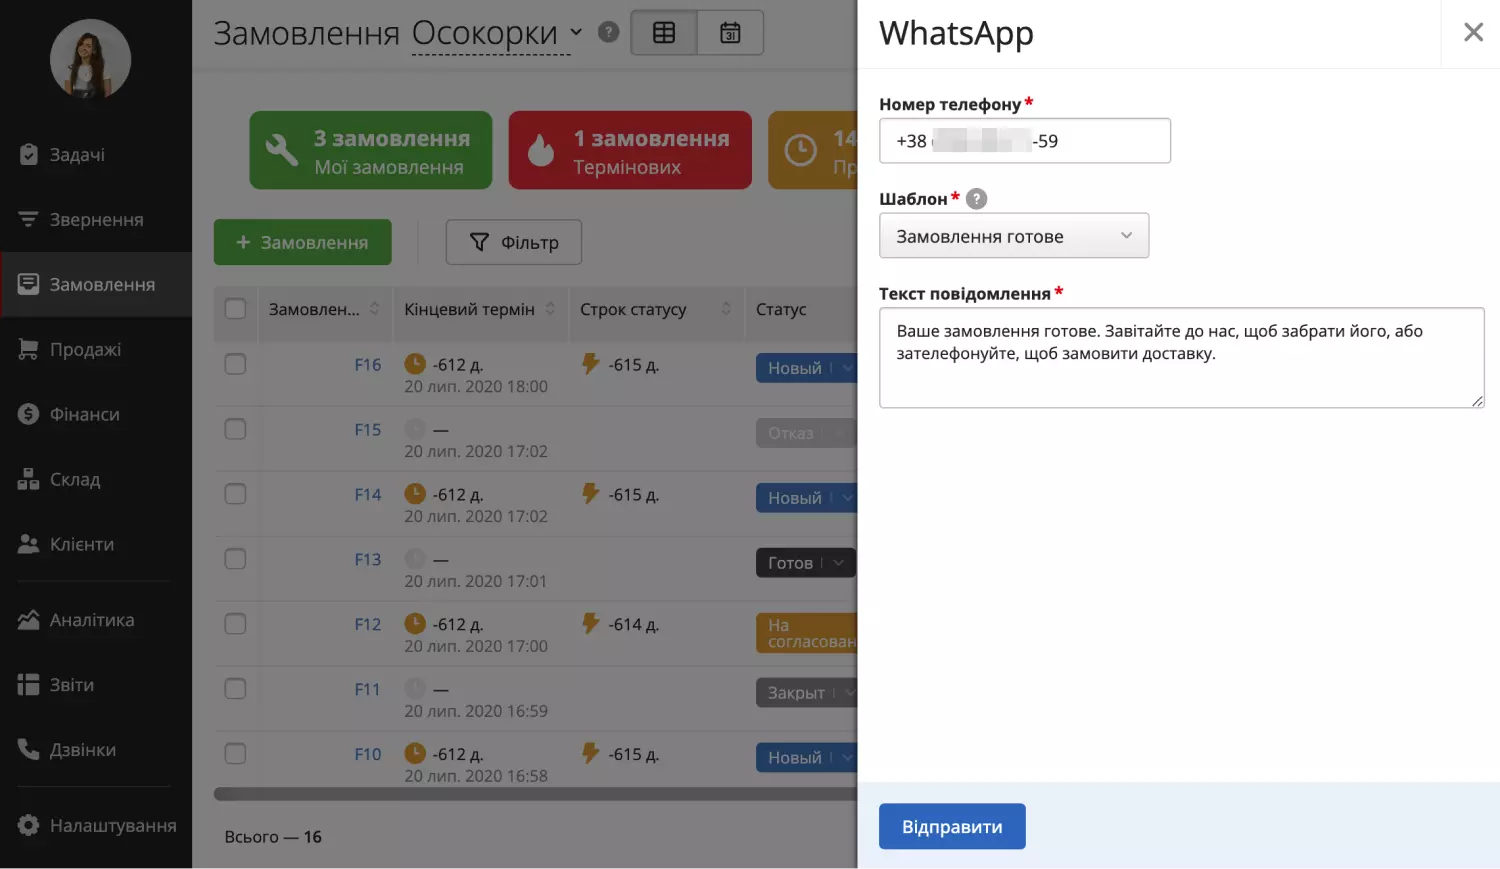 whatsapp-dialogue-ua.png (67 KB)